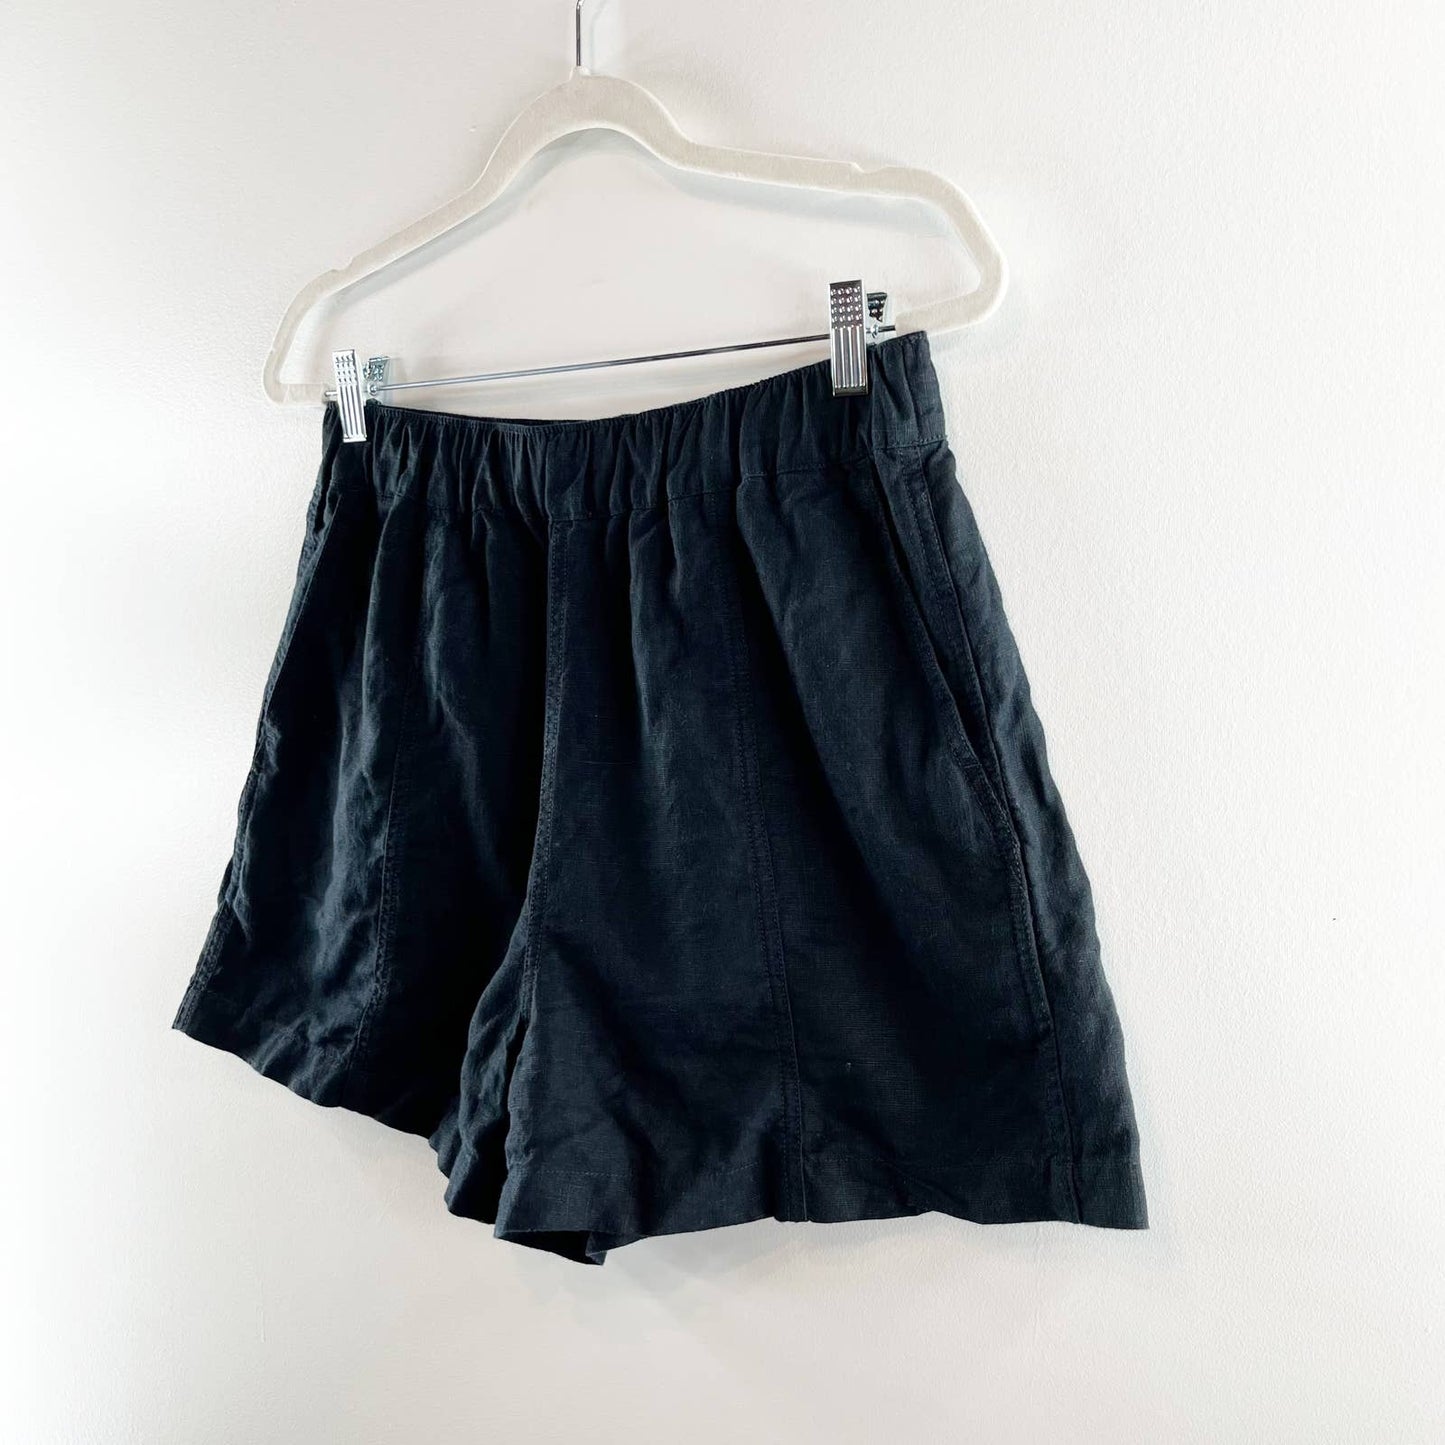 Madewell Easy Pull-On Shorts in Lightspun Black Coal Small